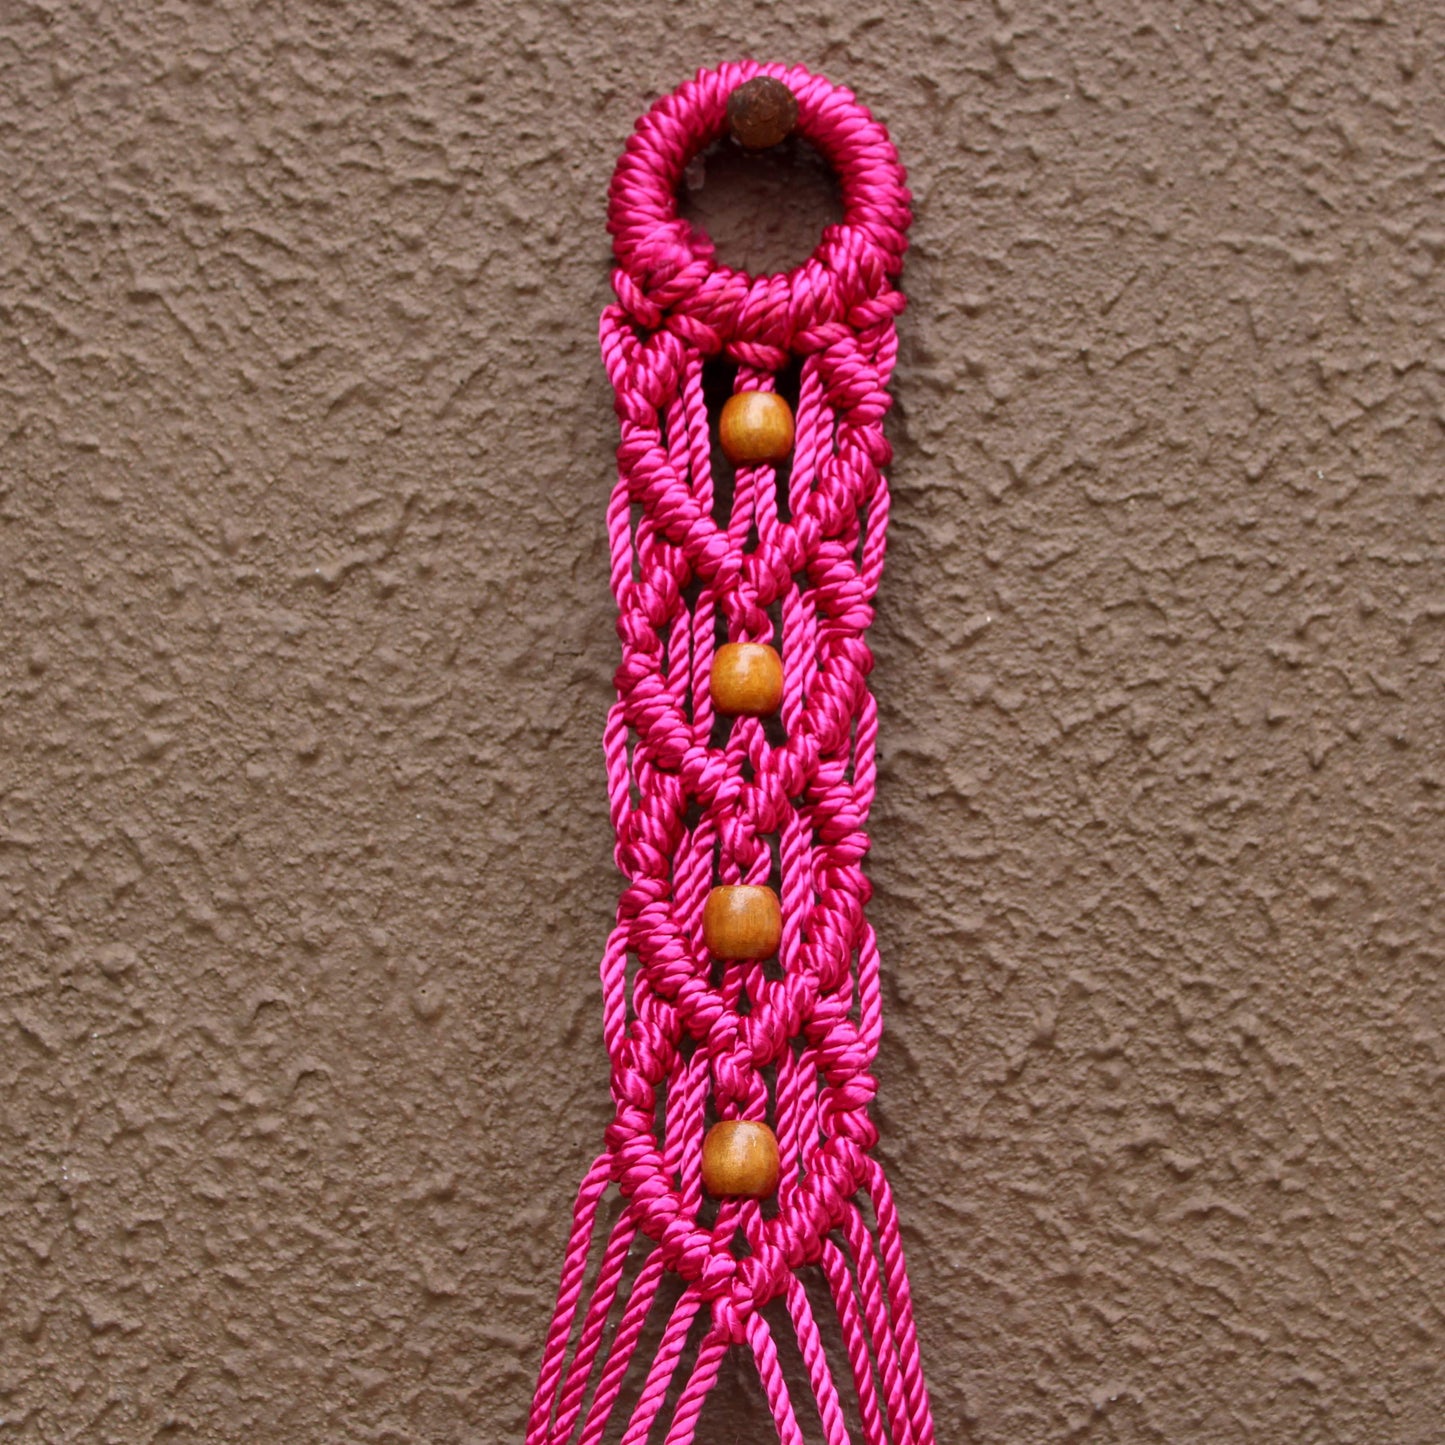 Pine Heart Pink Macrame Rope with Beads Wall Hanging Shelf